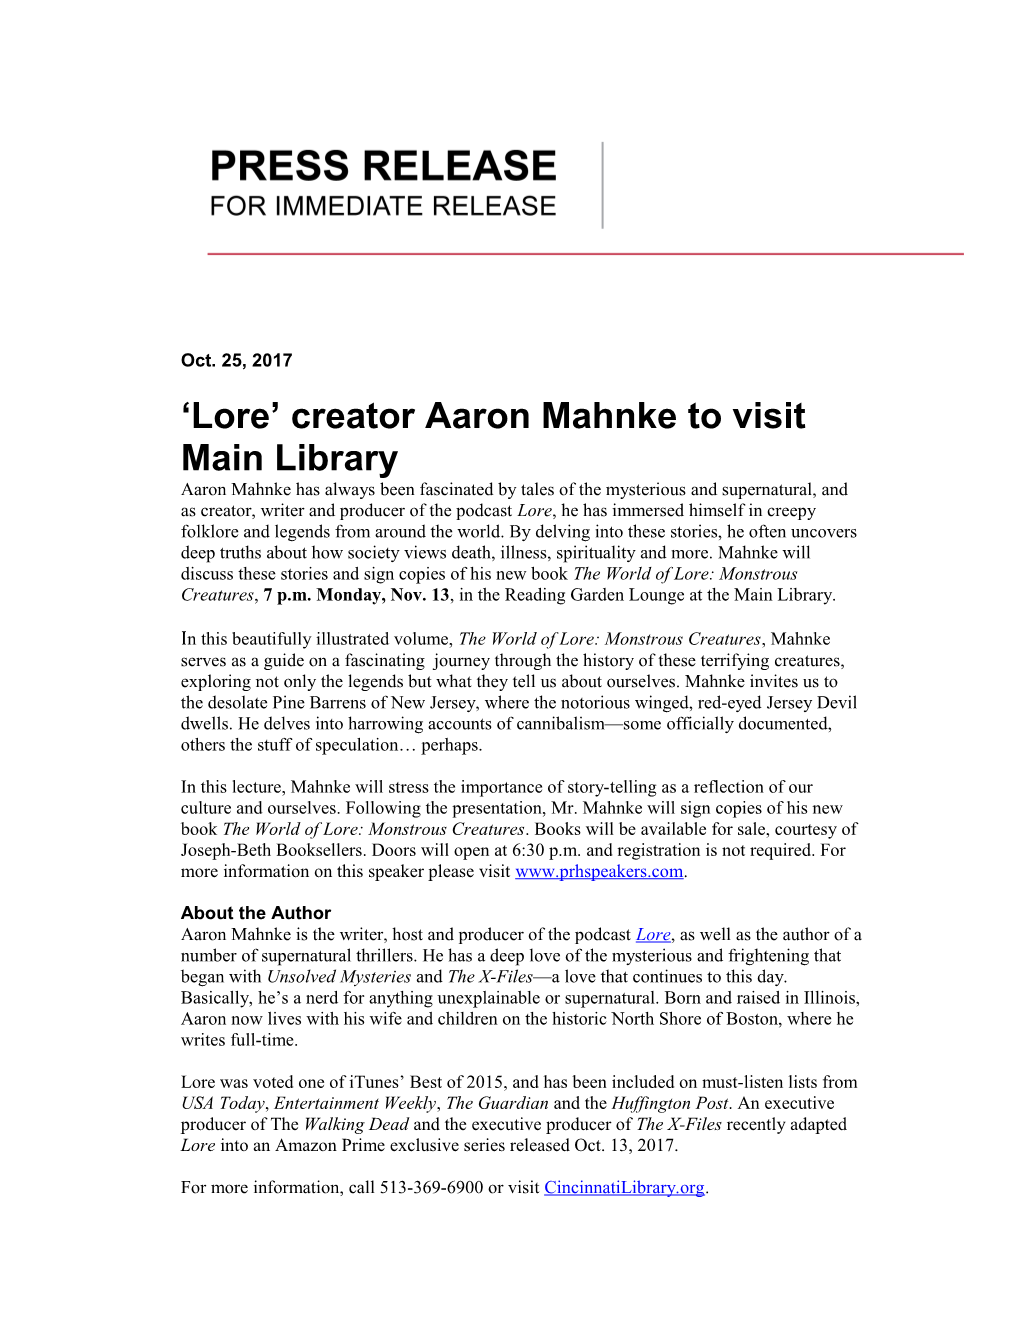 Lore Creatoraaron Mahnketo Visit Main Library